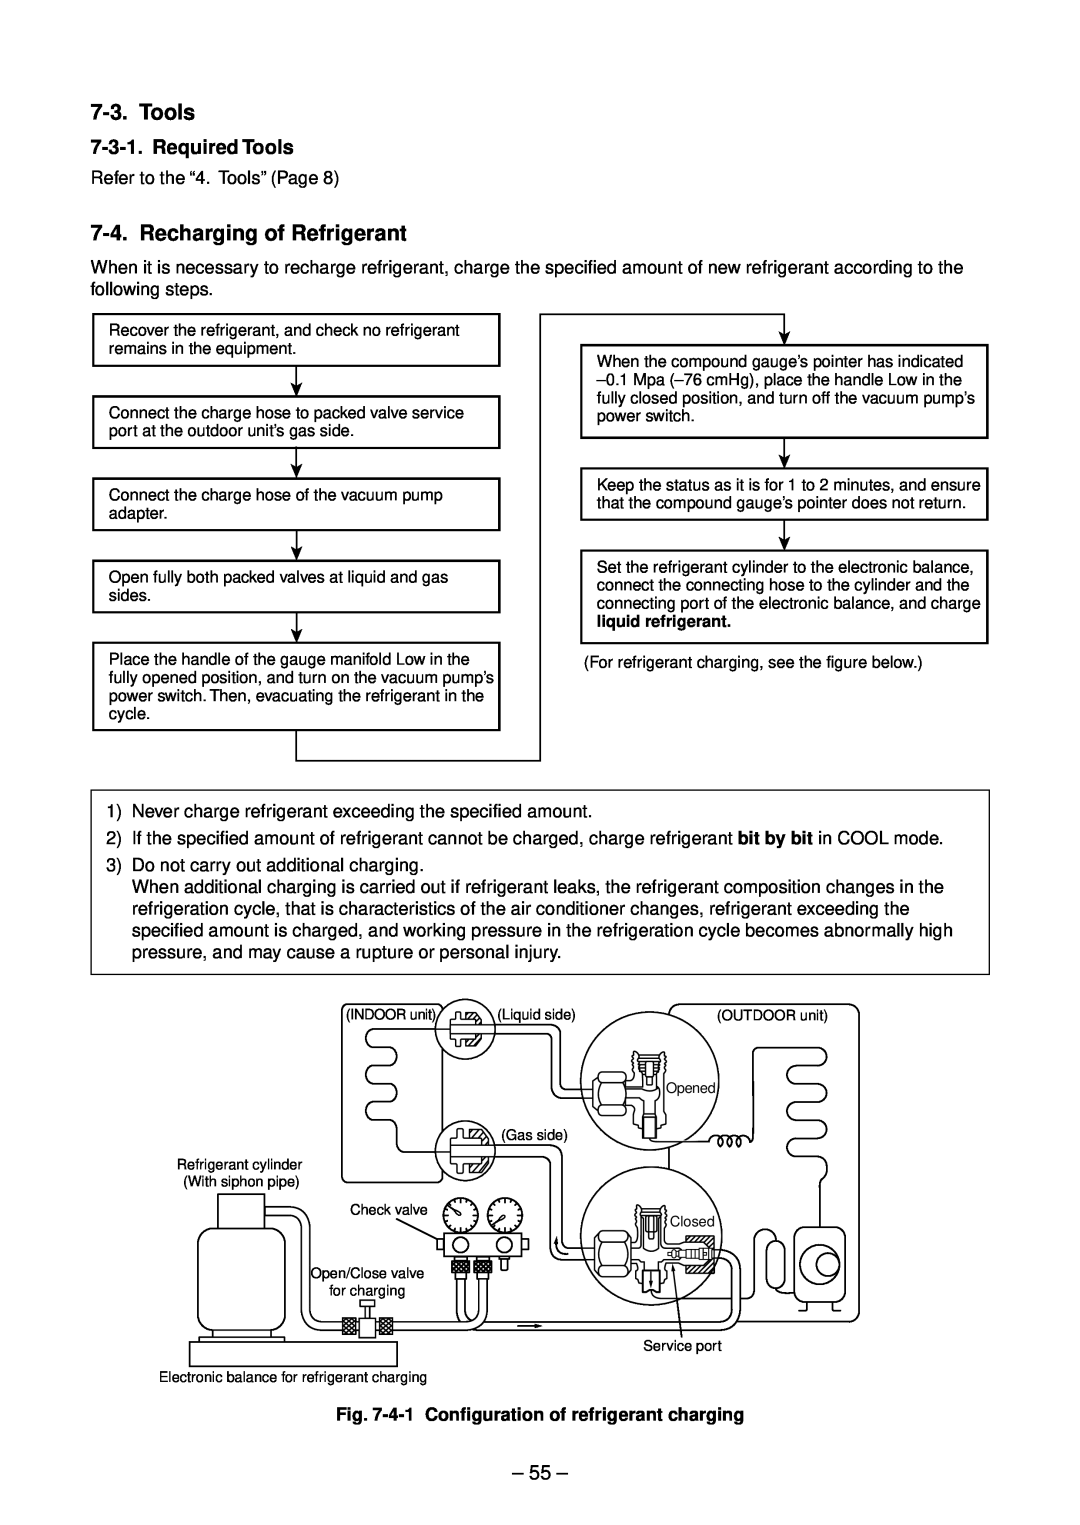 Toshiba RAV-SM562UT-E Recharging of Refrigerant, Required Tools, 55, 4-1Configuration of refrigerant charging 